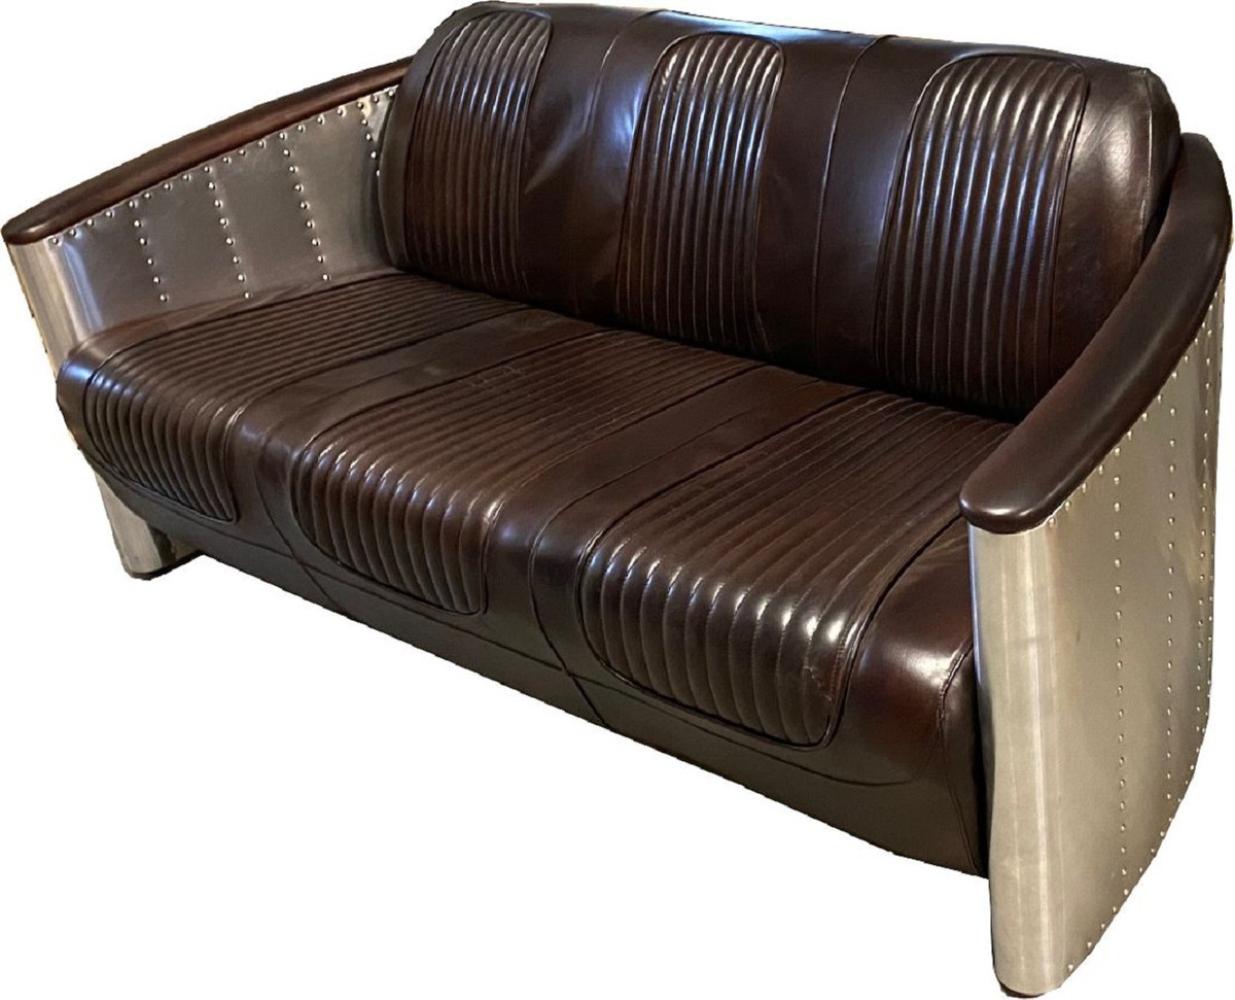 Casa Padrino Luxus Art Deco Leder Sofa 172 x 70 x H. 82 cm - Verschiedene Farben - Aluminium Wohnzimmer Sofa mit Echtleder - Aluminium Flugzeug Flieger Sofa Möbel Bild 1